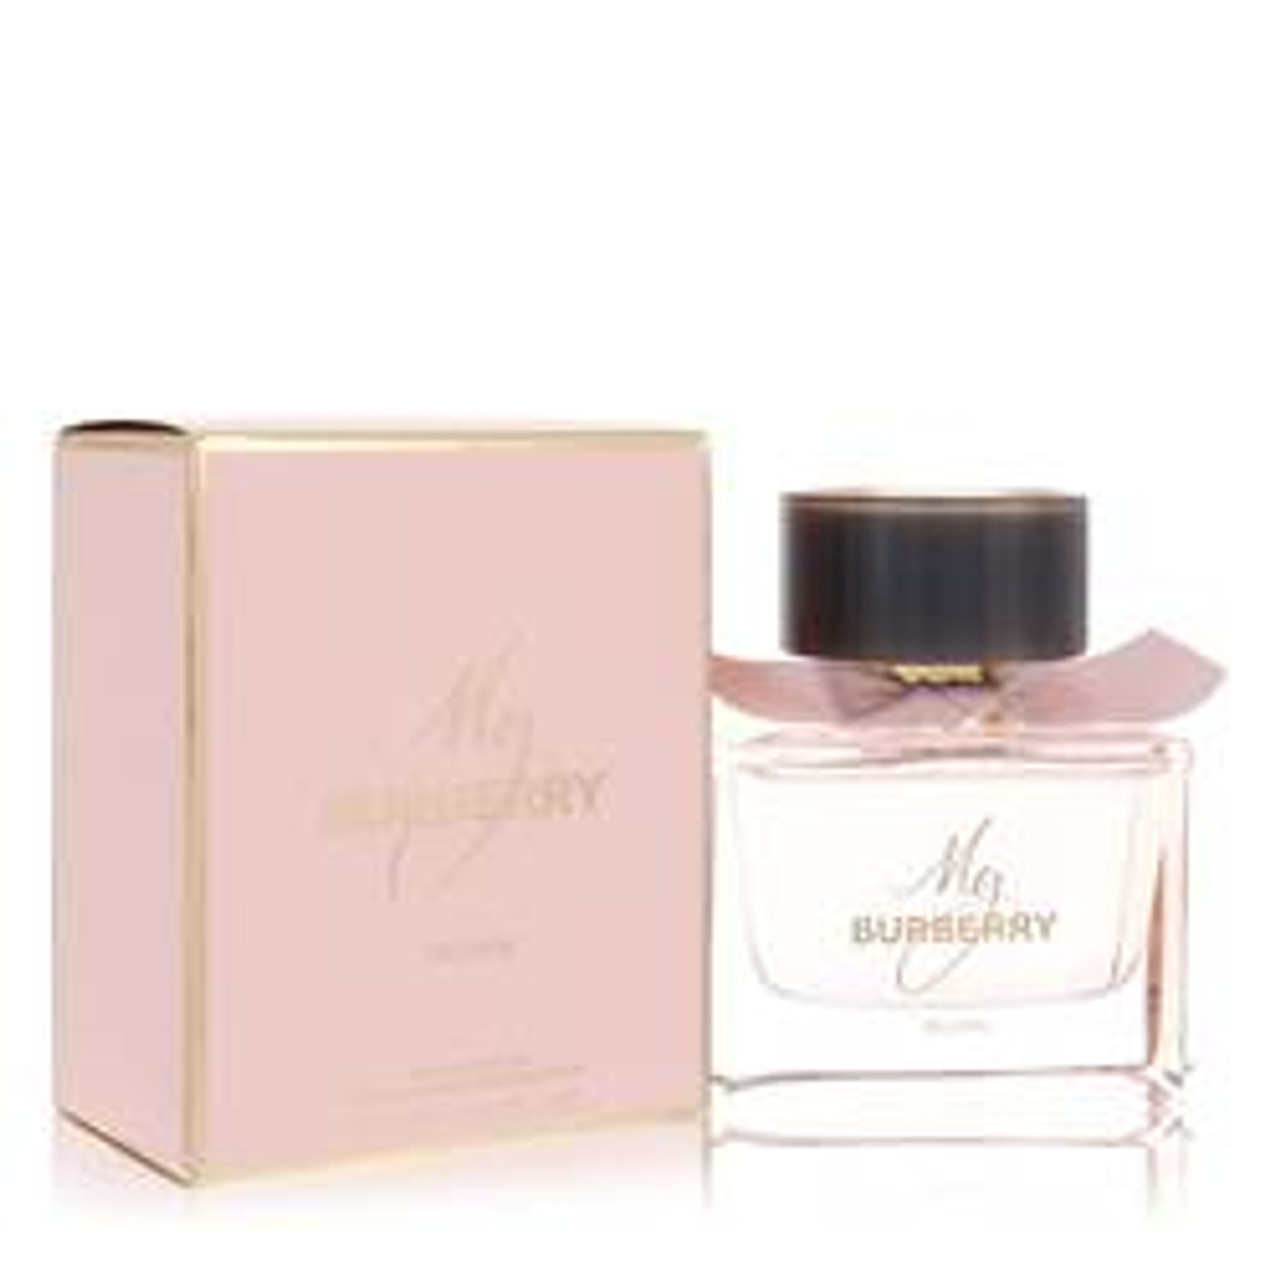 My Burberry Blush Perfume By Burberry Eau De Parfum Spray 3 oz for Women - *Pre-Order